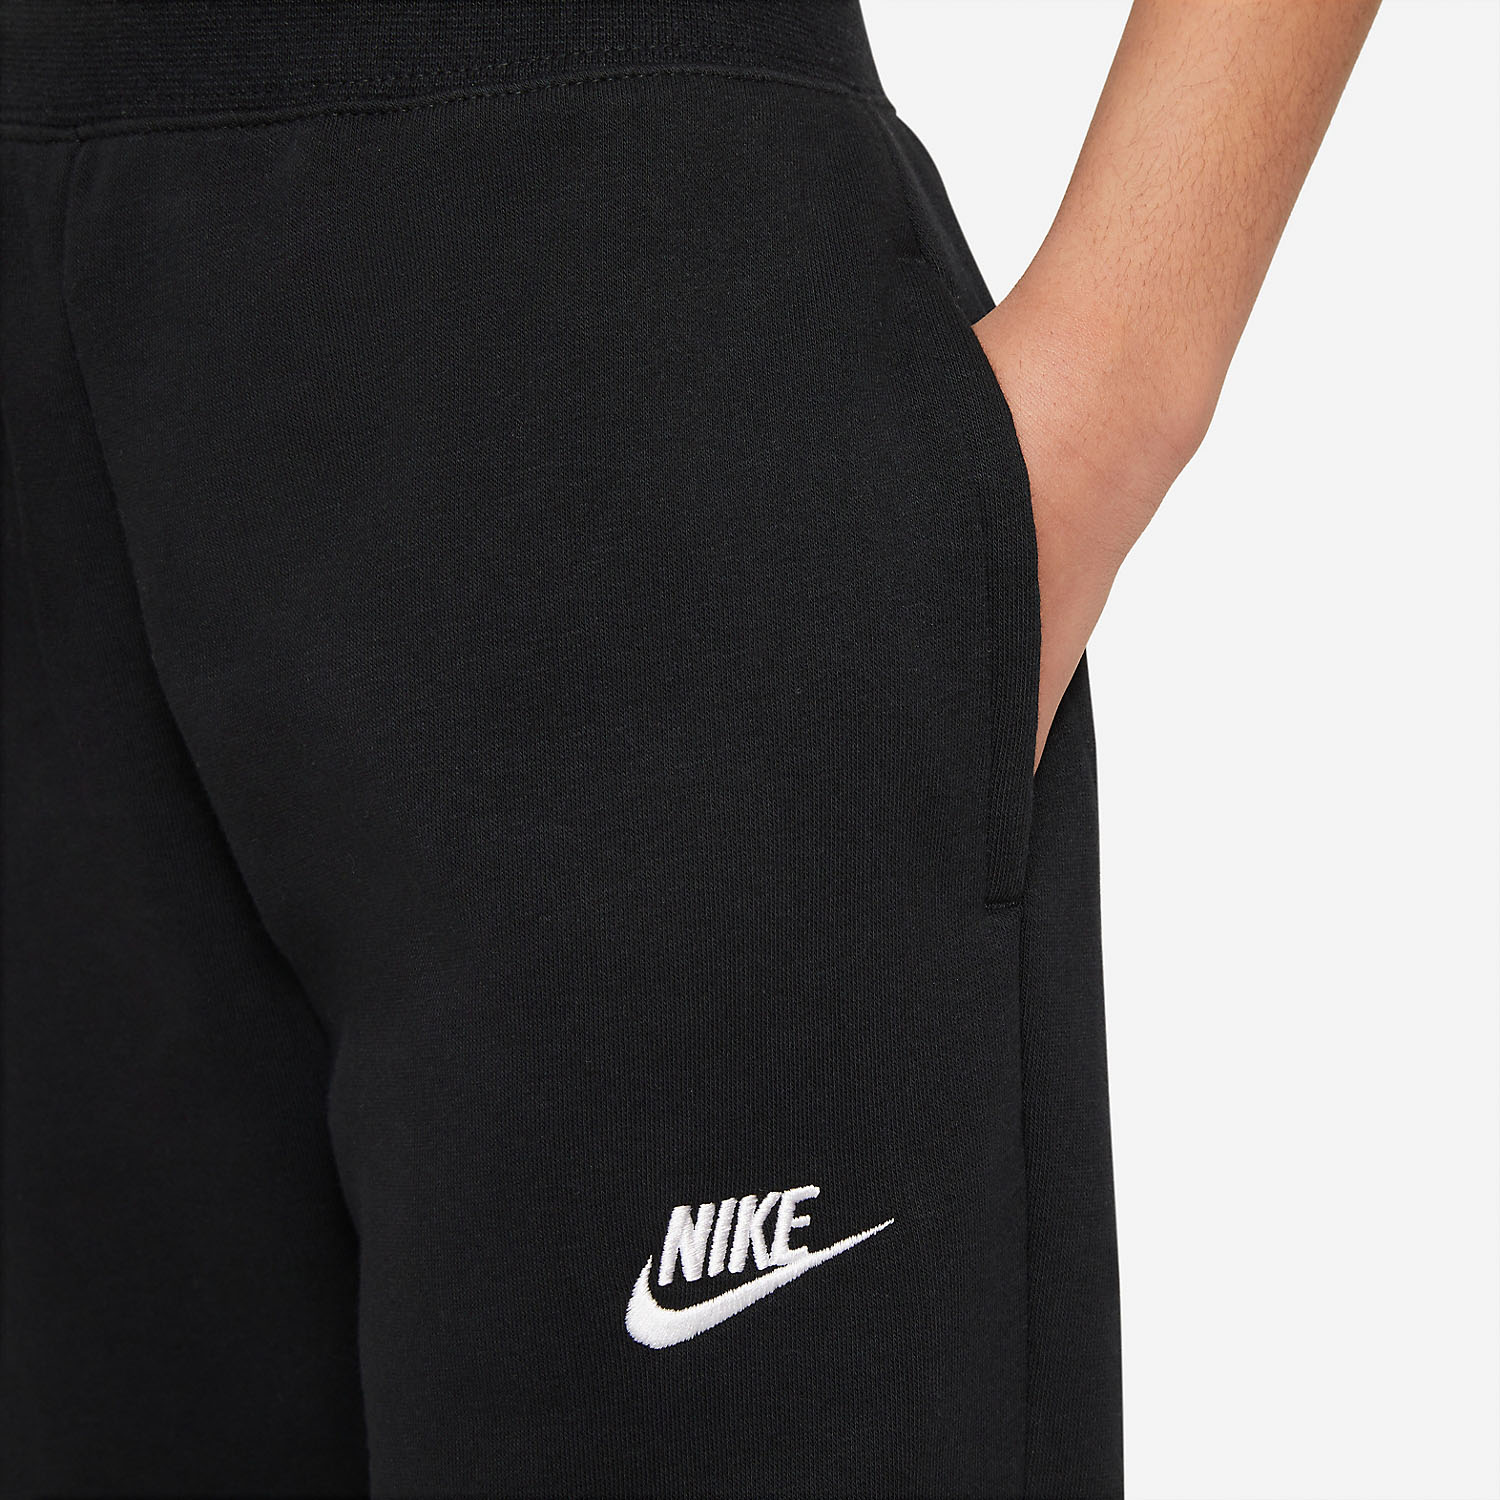 Nike Club Girl's Tennis Pants - Black/White